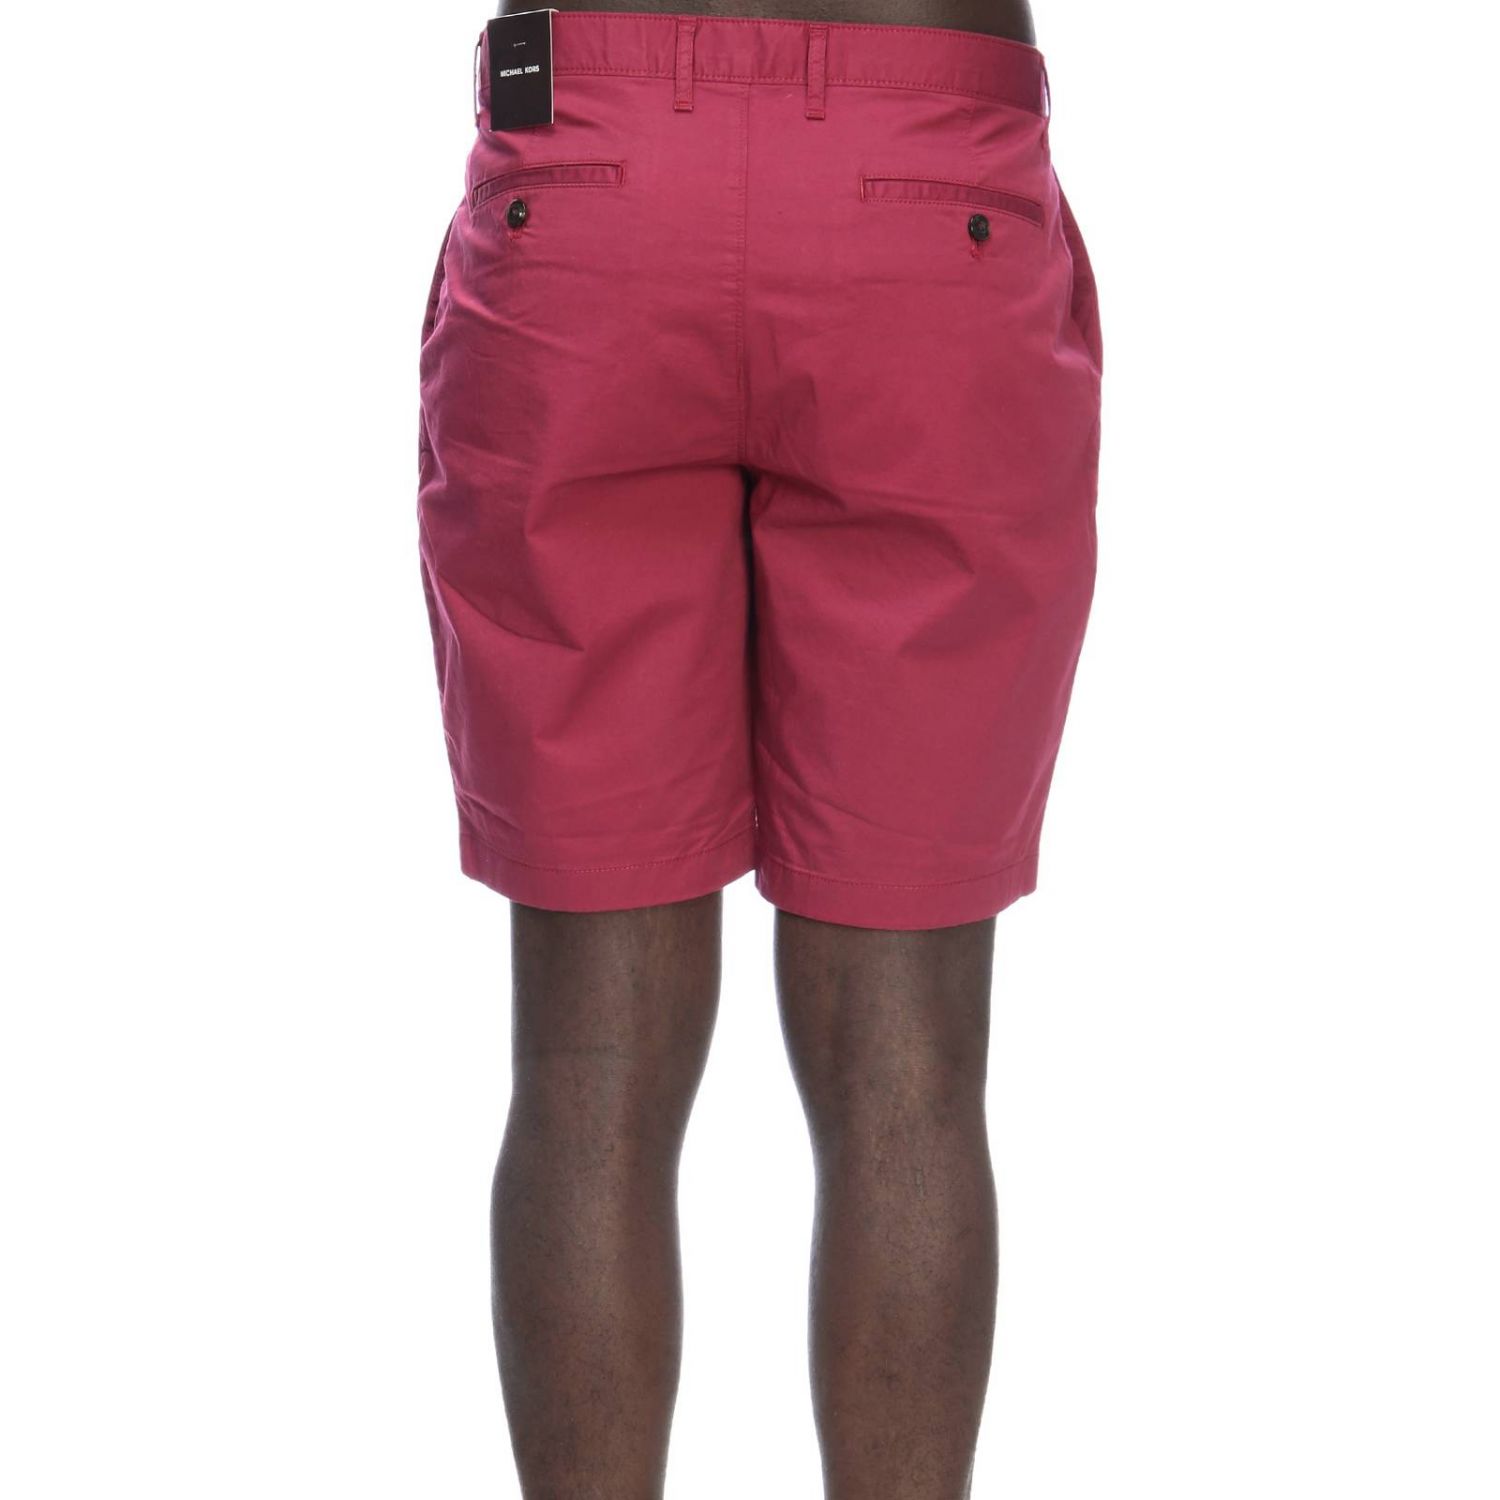 michael kors bermuda shorts